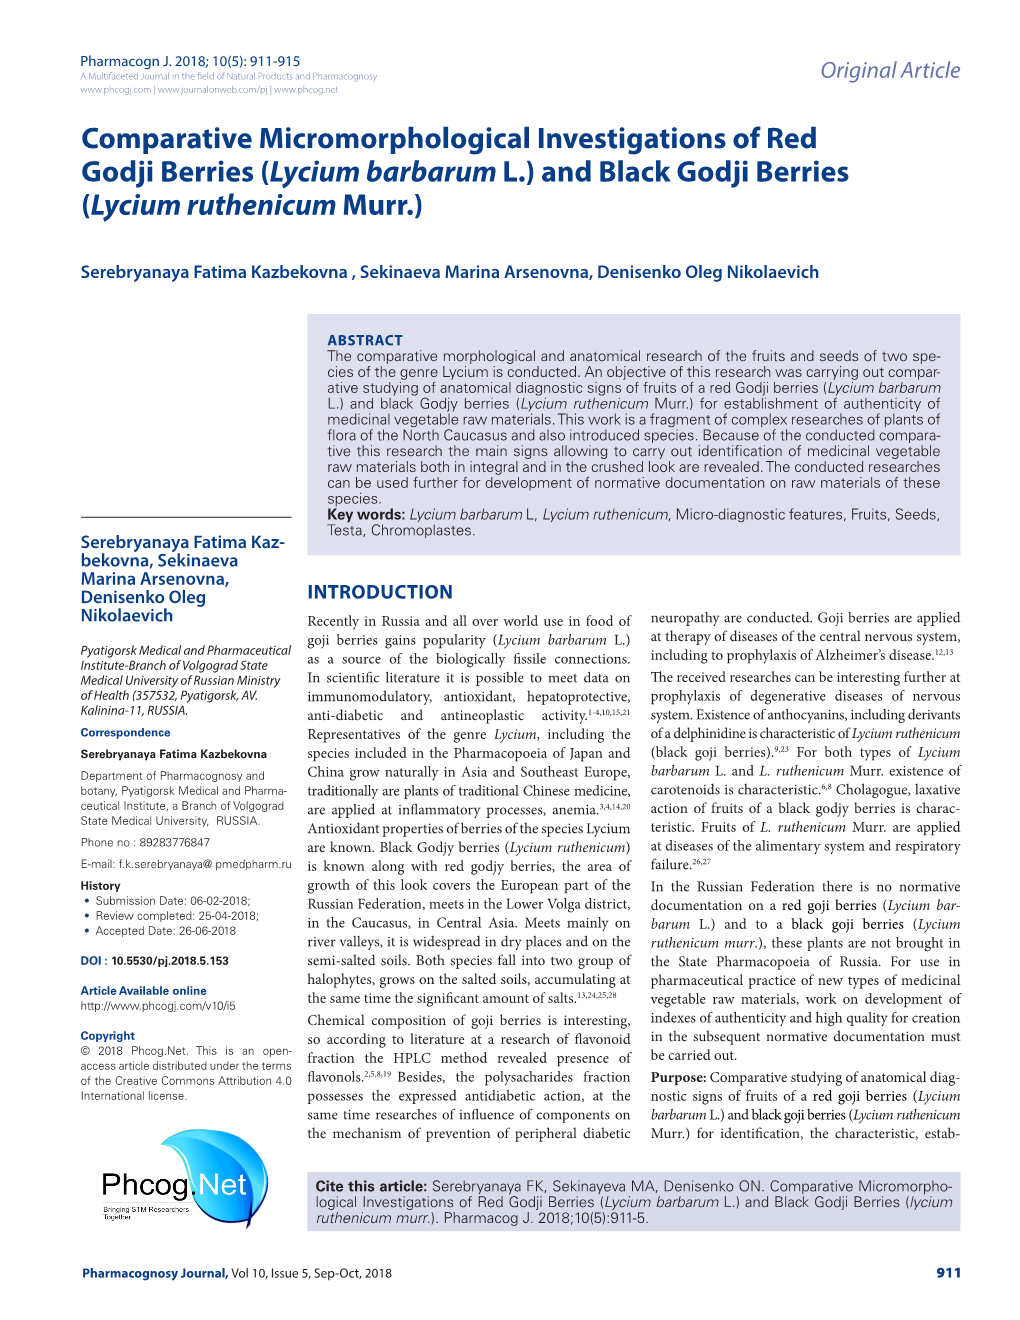 Comparative Micromorphological Investigations of Red Godji Berries (Lycium Barbarum L.) and Black Godji Berries (Lycium Ruthenicum Murr.)